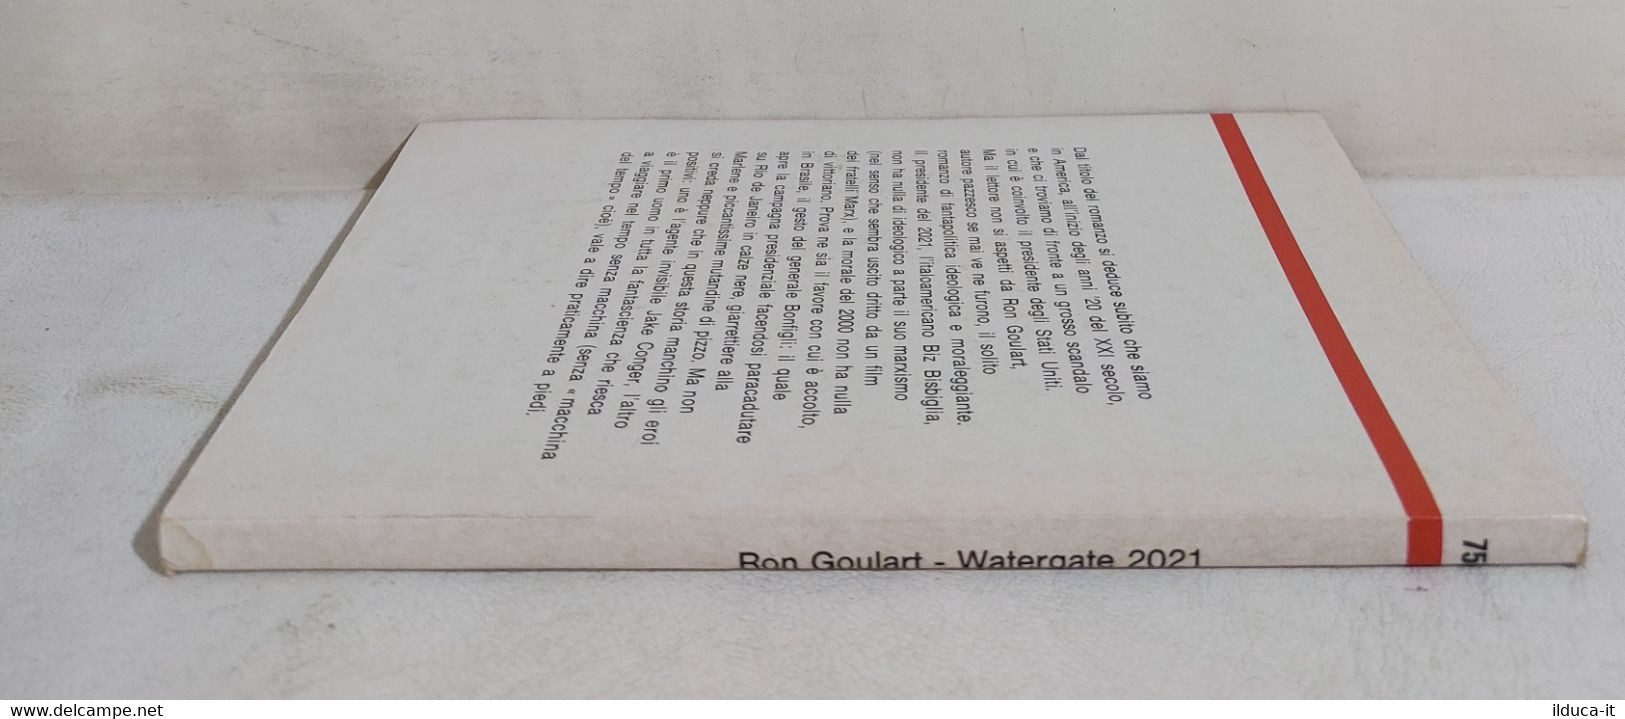 I111753 Urania N. 753 - Ron Goulart - Watergate 2021 - Mondadori 1978 - Sci-Fi & Fantasy